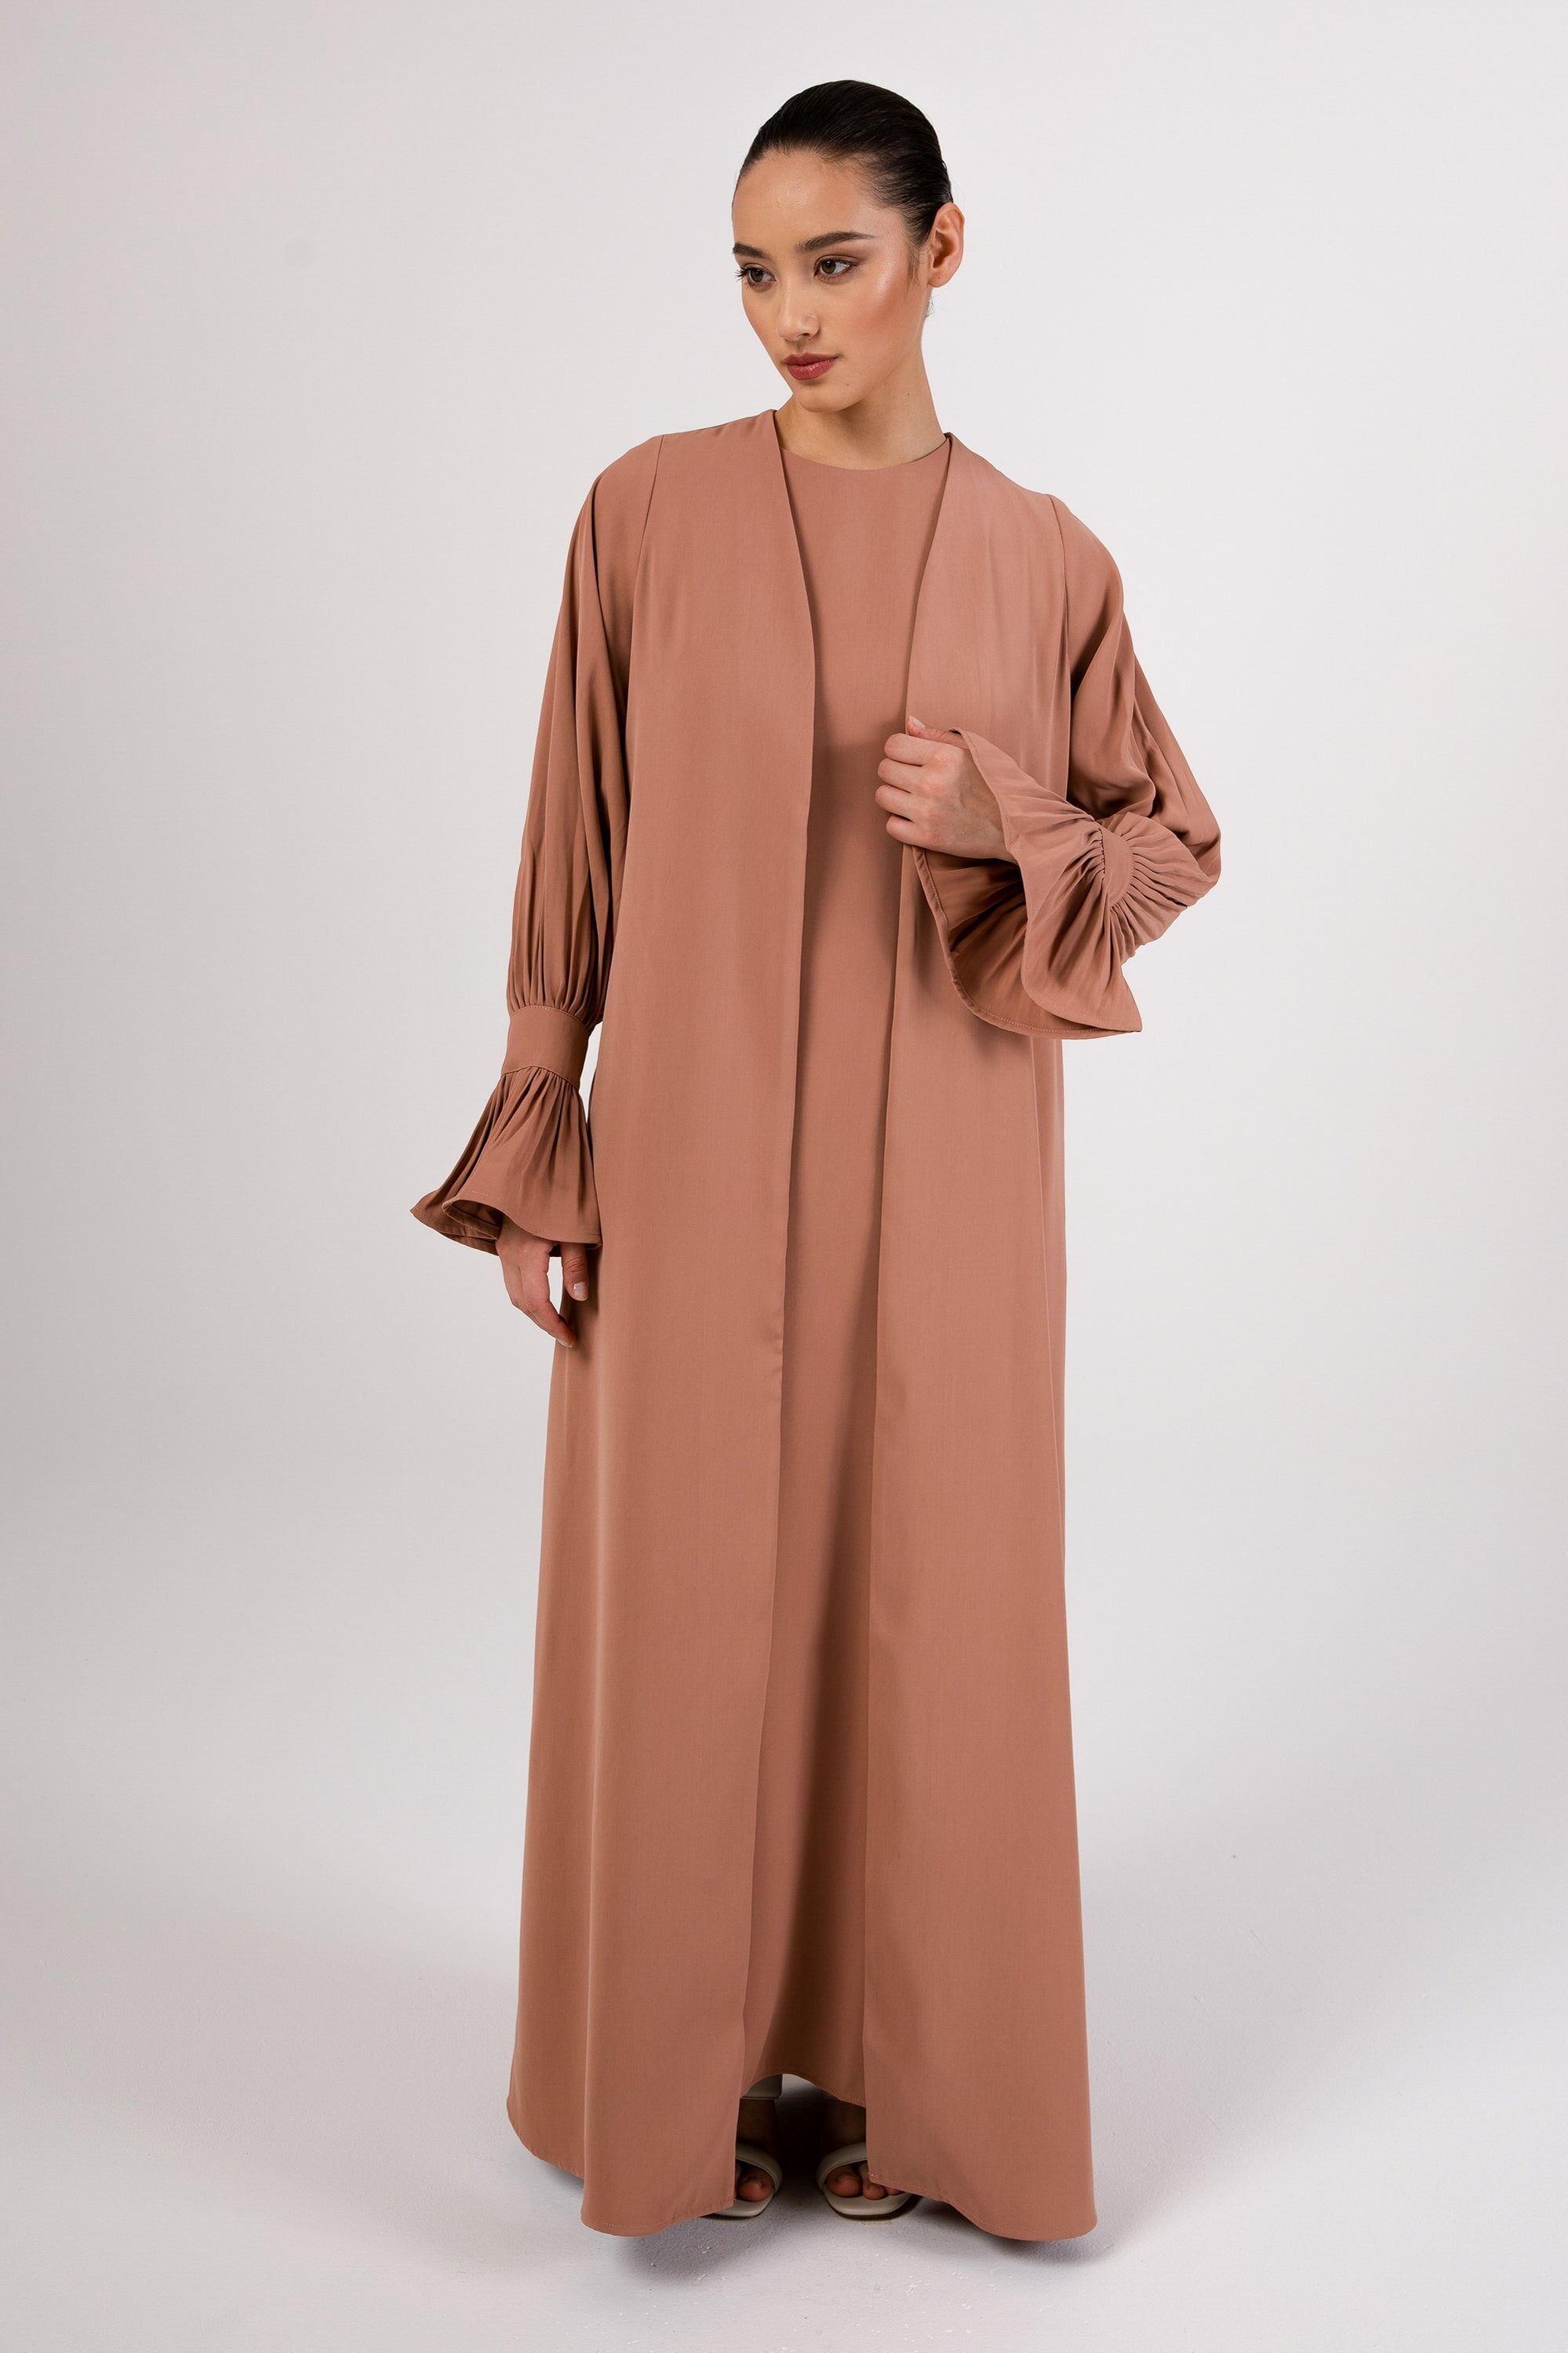 Jamila Cinched Sleeve Open Abaya and Dres Set - Desert Clay Abayas Veiled 